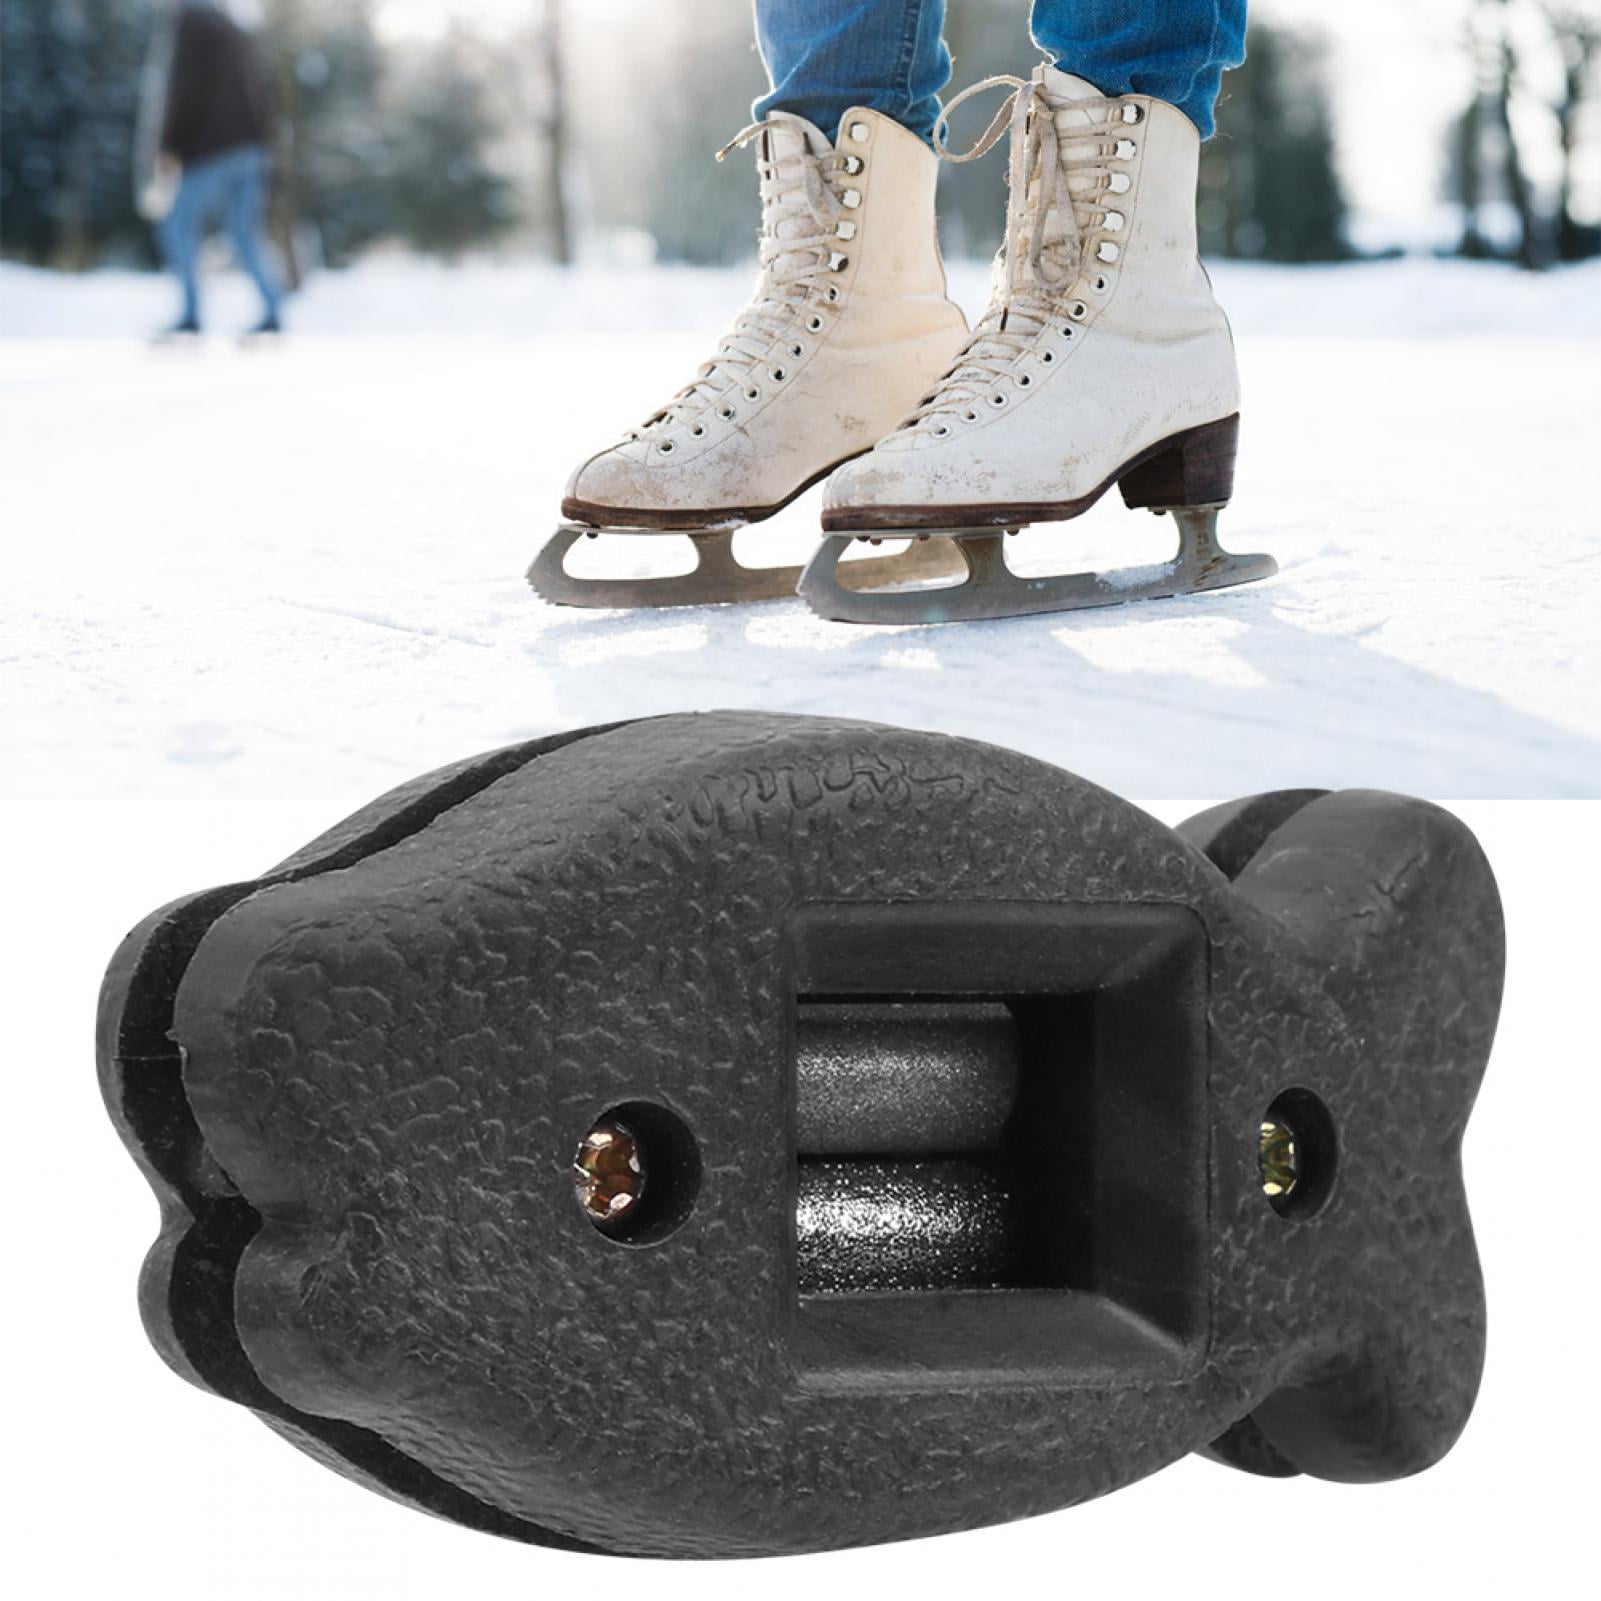 Deror Hockey Skate Sharpener,Ice Skate Shoes Grinding Conditioner Edge Blades Maintenance Tool